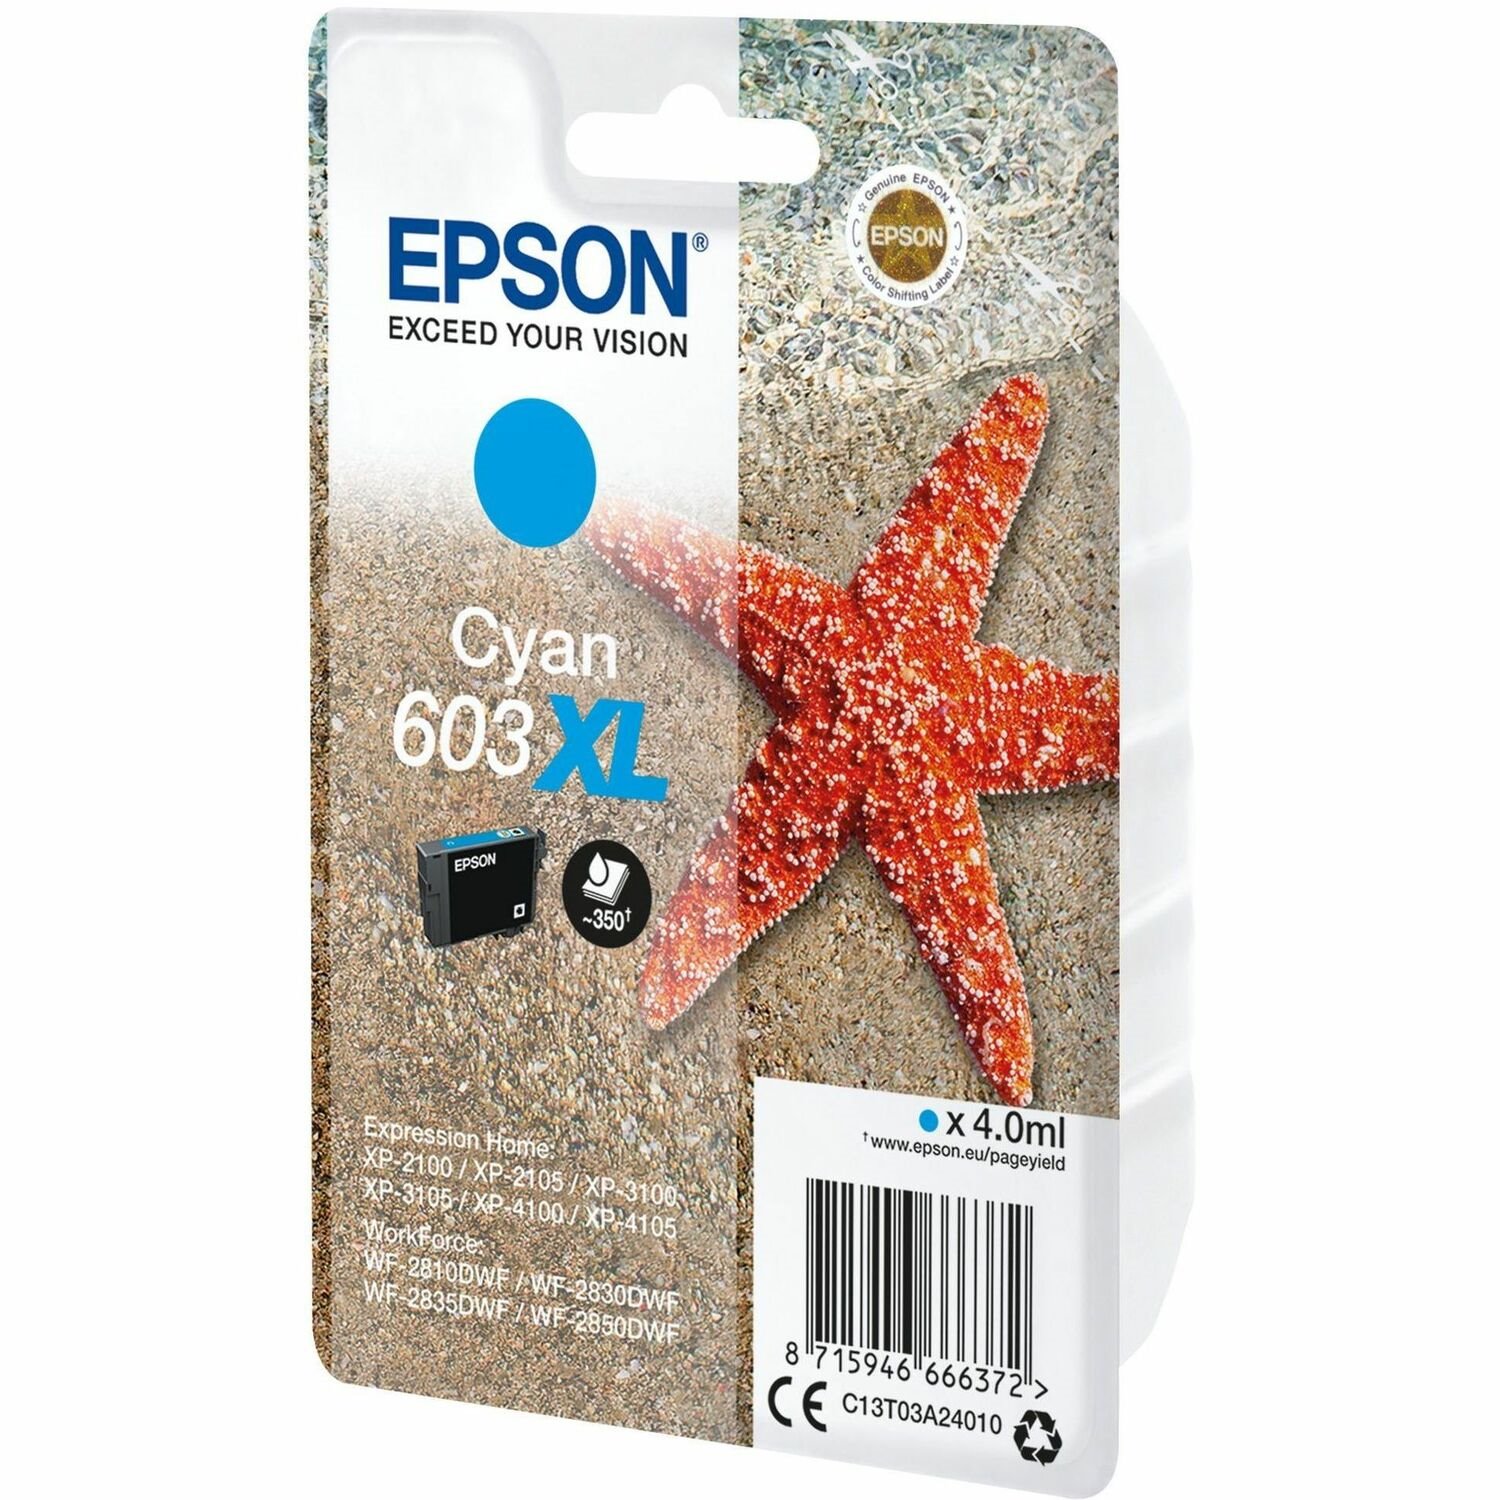 Epson 603XL Original Extra Large Yield Inkjet Ink Cartridge - Single Pack - Cyan - 1 Pack